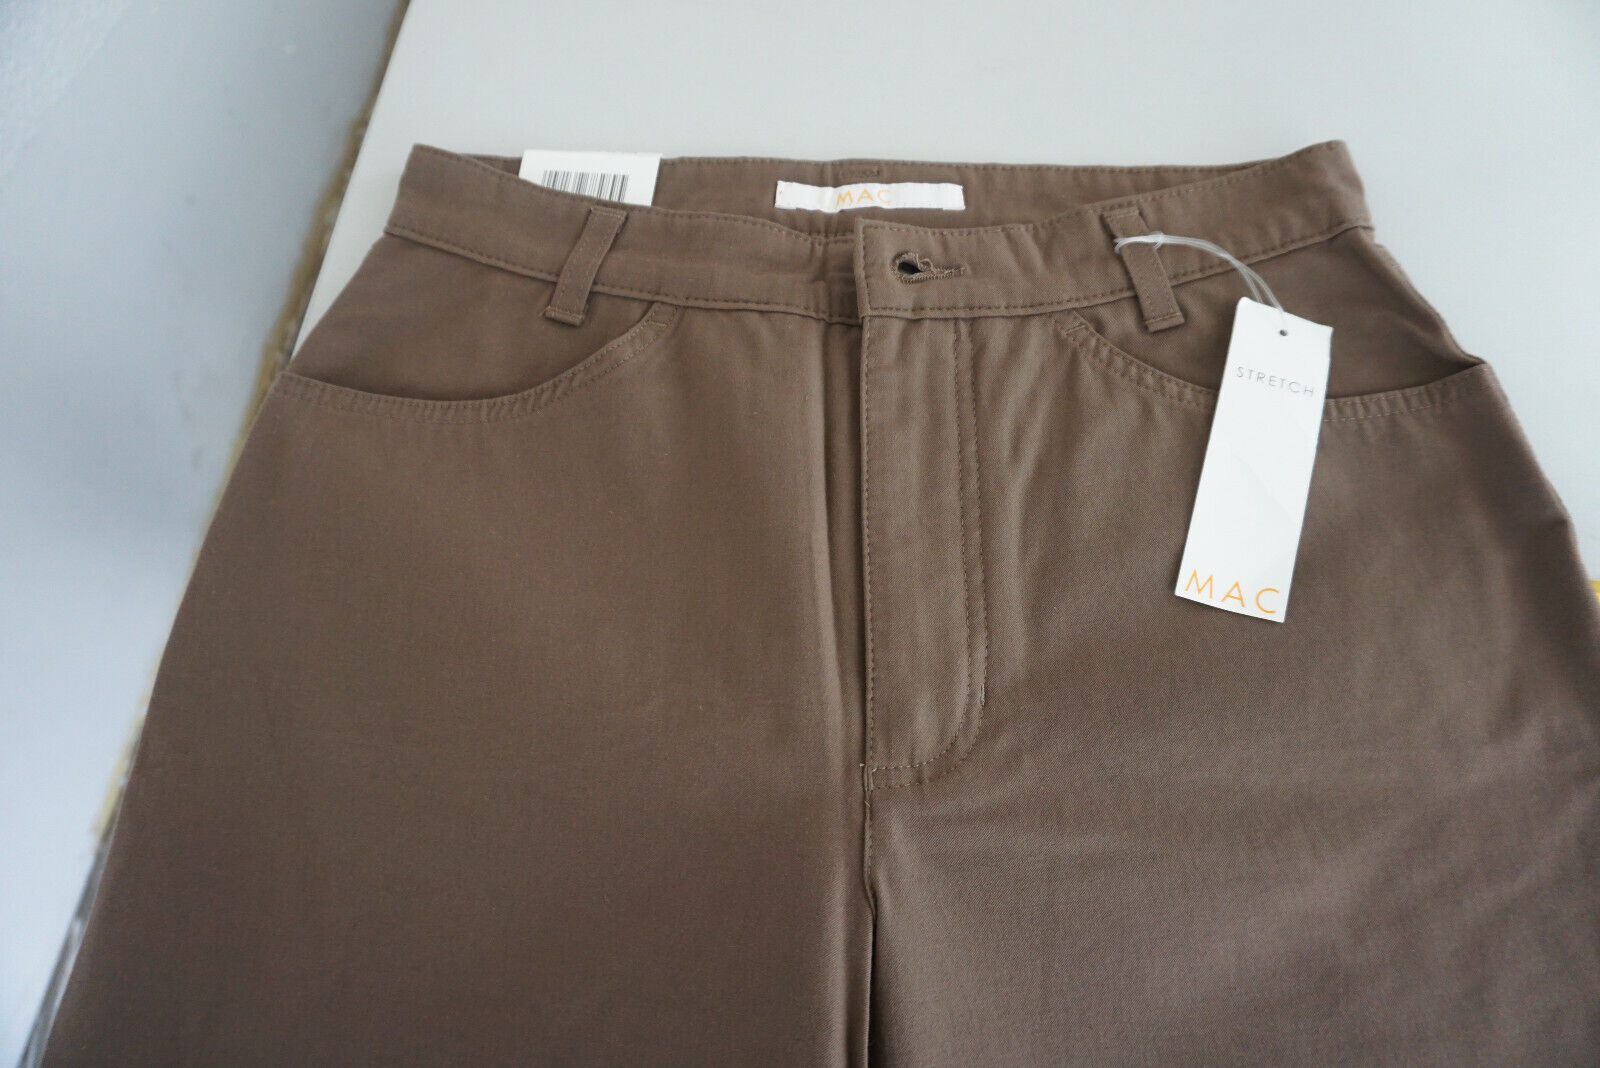 Mac Melanie Women's Jeans Stretch Pants Trousers Gr.36 26/34 W26 L34  Braun New | eBay